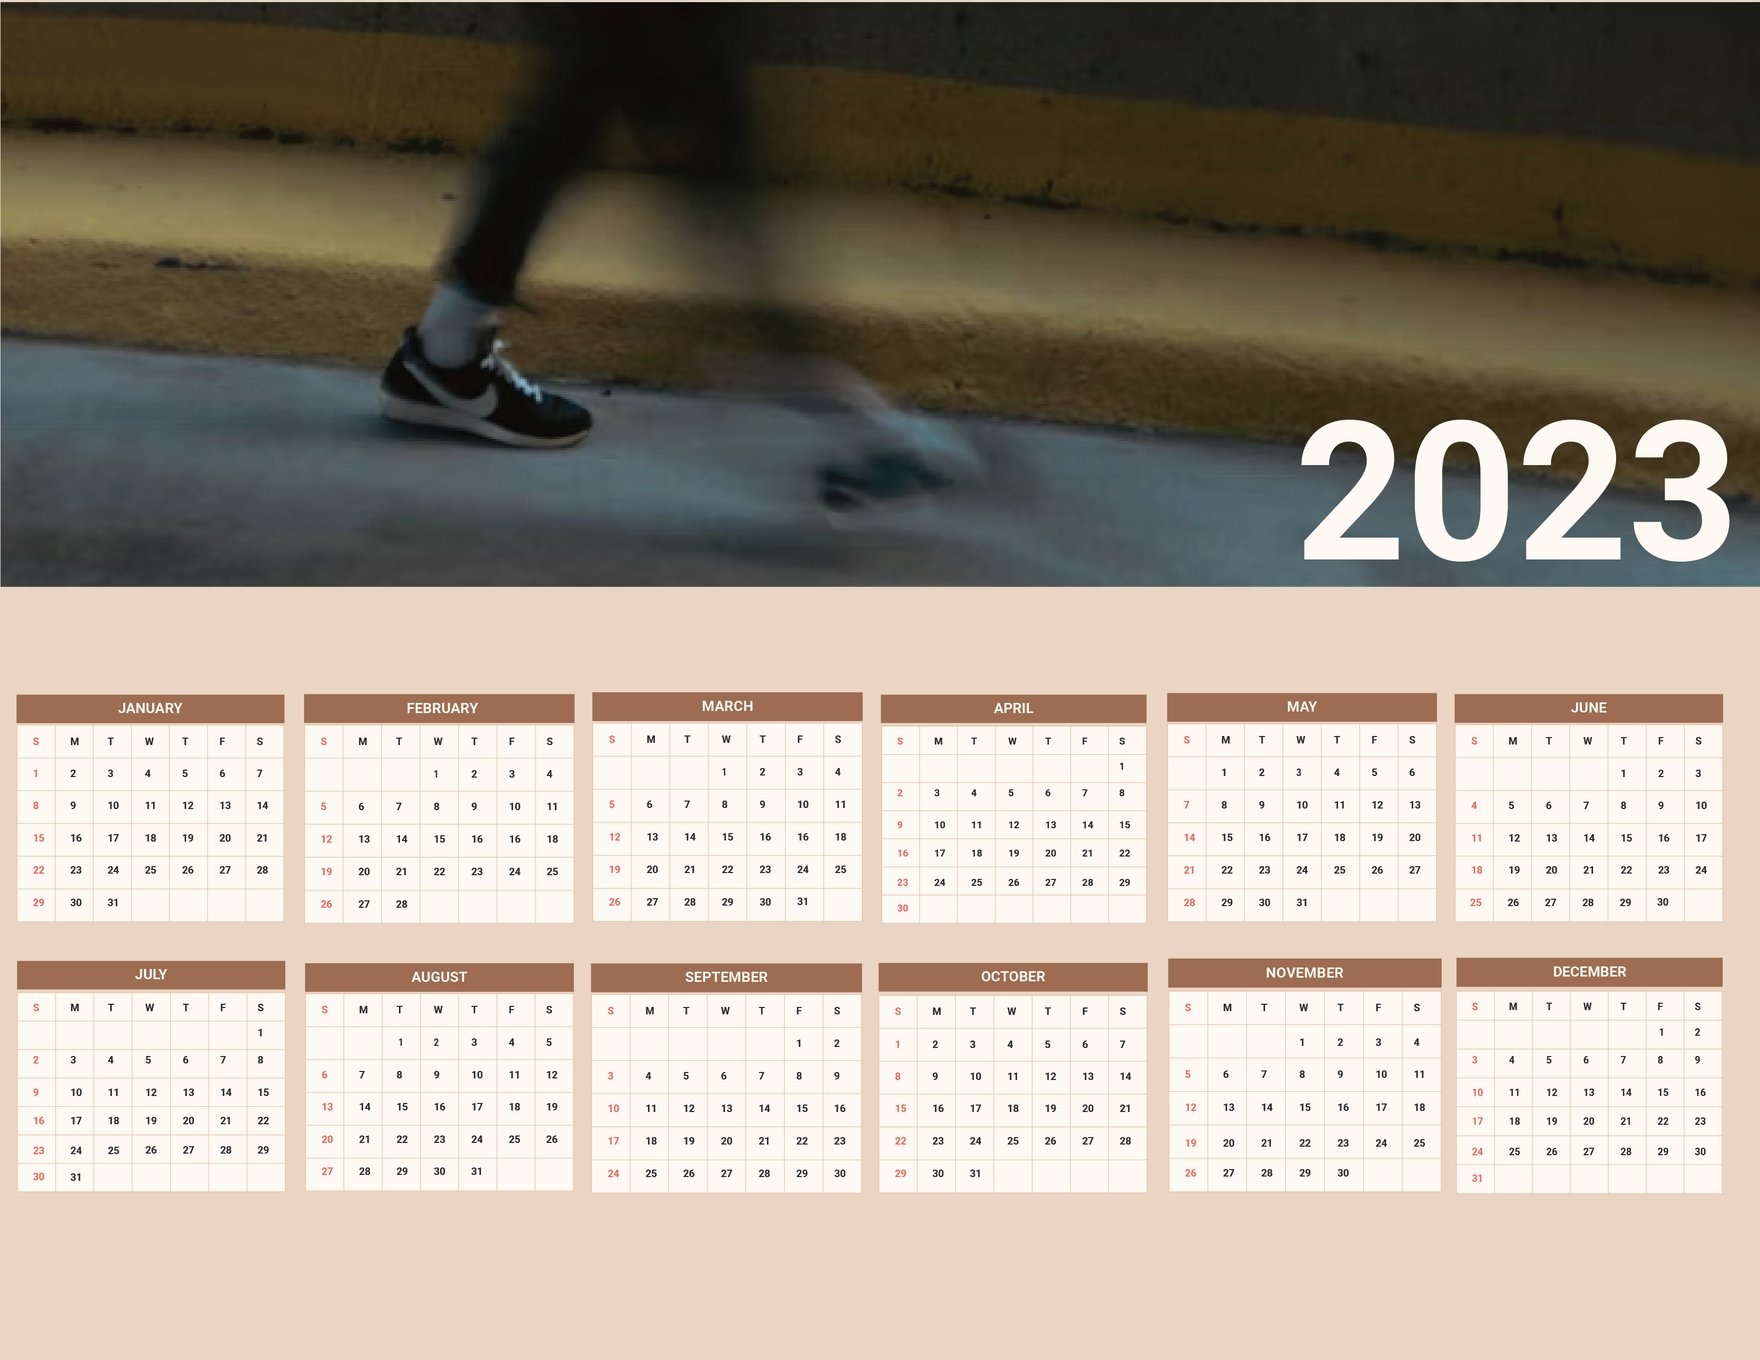 Year 2023 Photo Calendar Template in Word, Illustrator, PSD